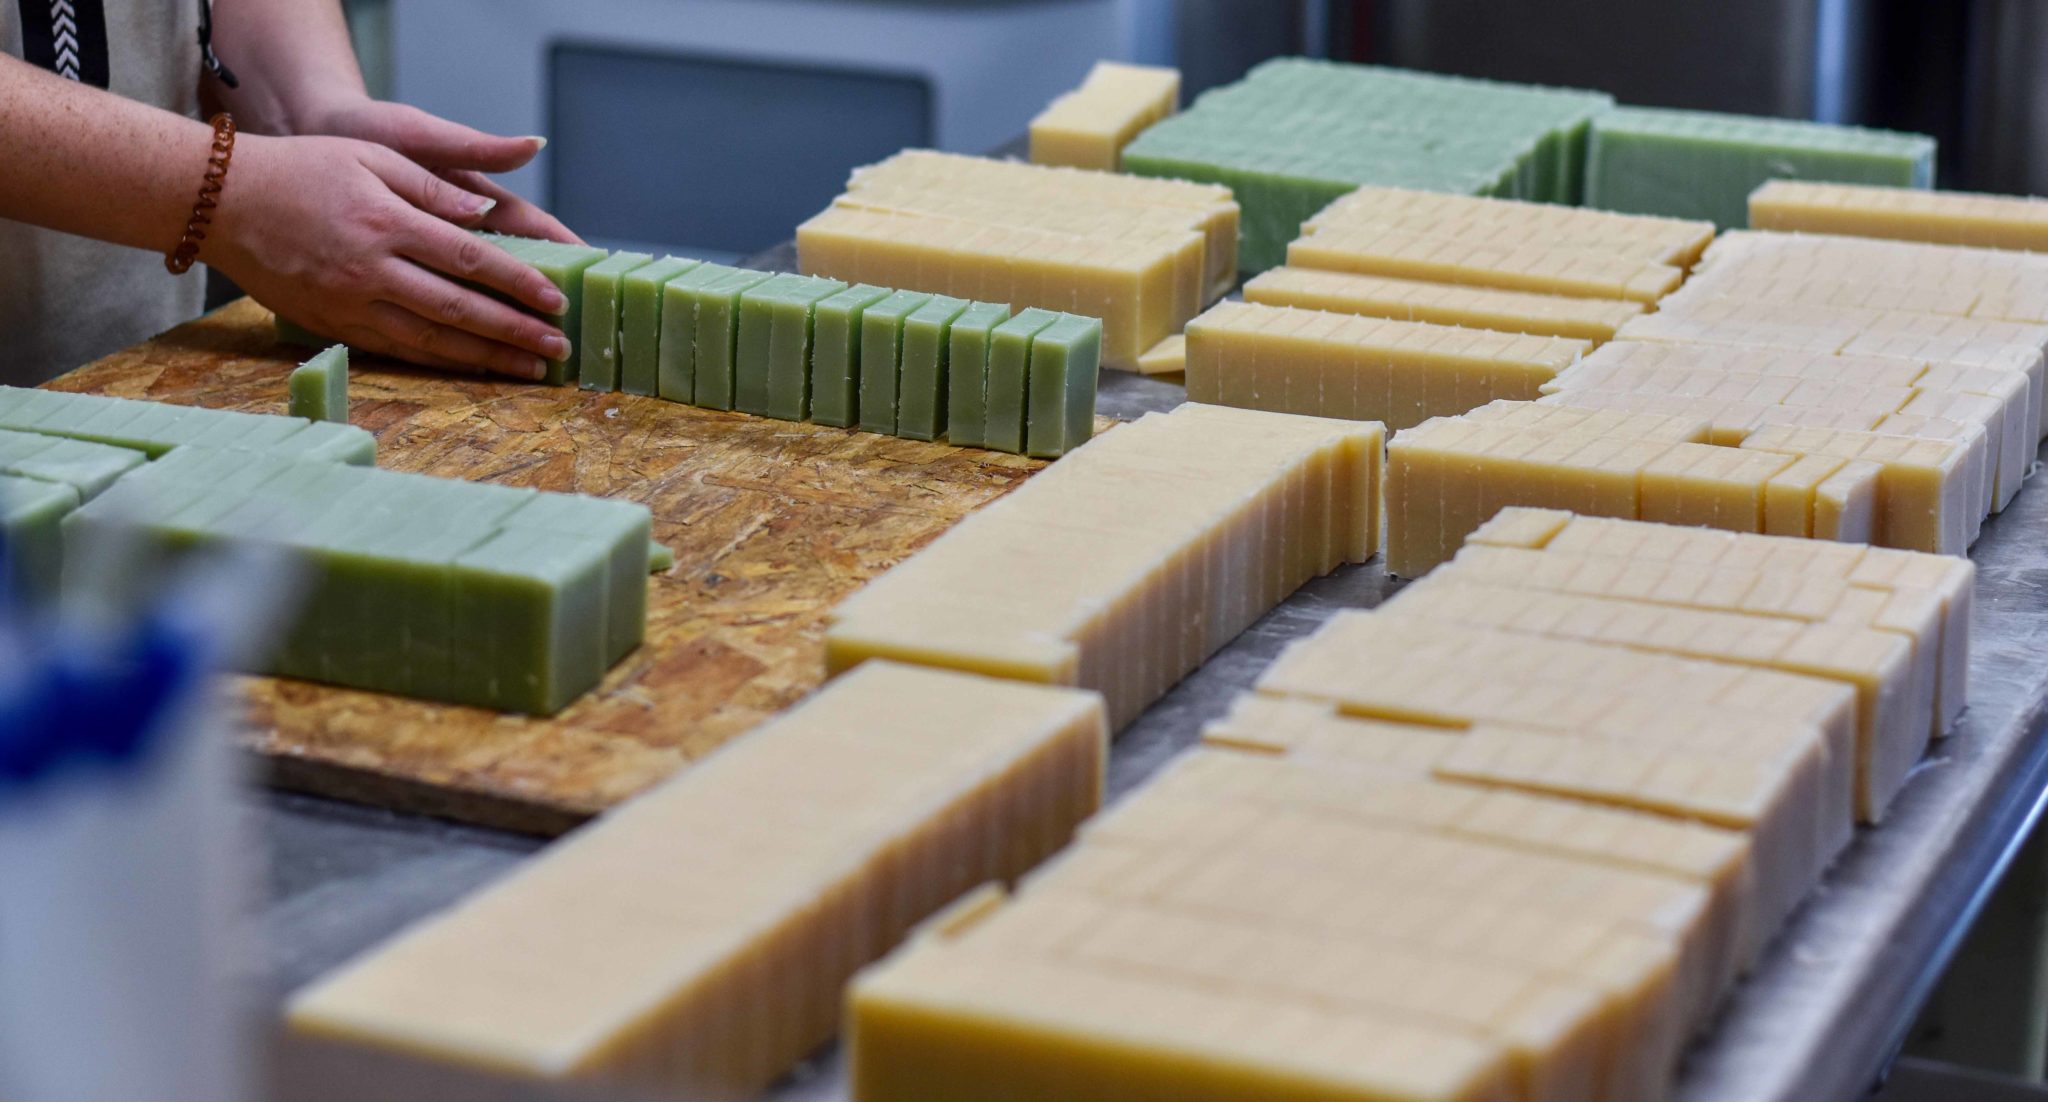 Atelier de fabrication de savon - Savon artisanal & naturel BARBOTINE